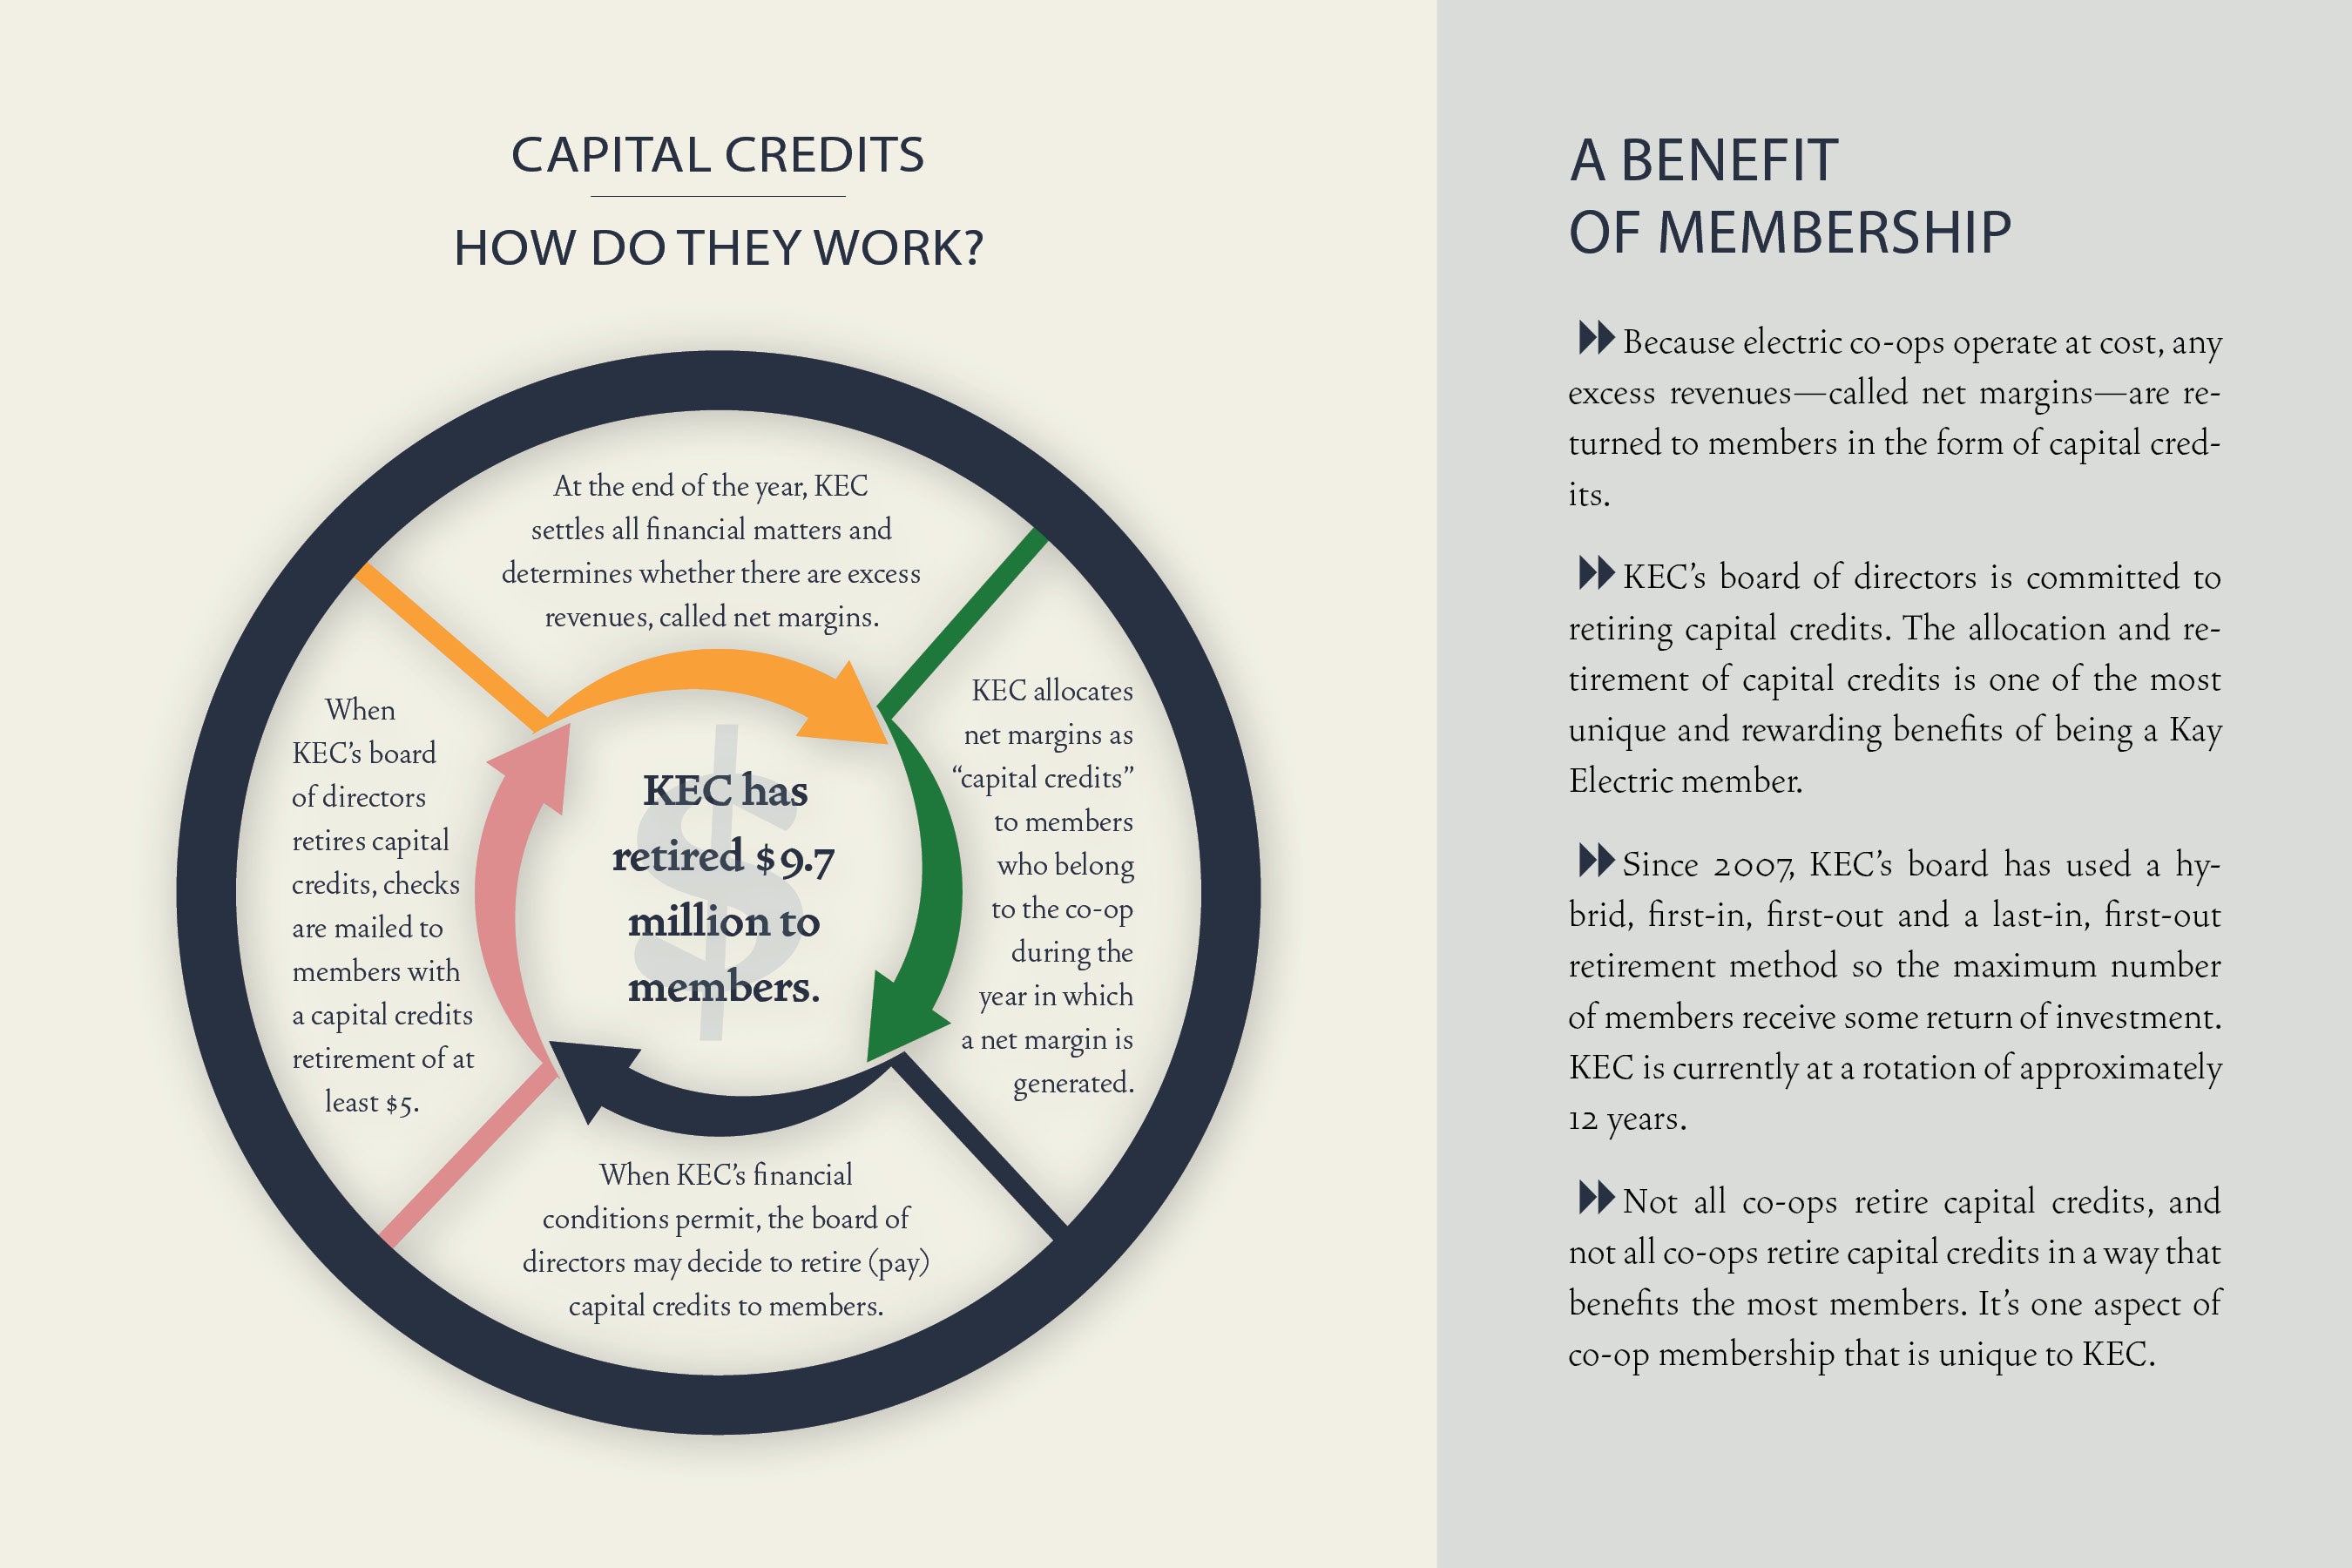 How do Capital Credits work?